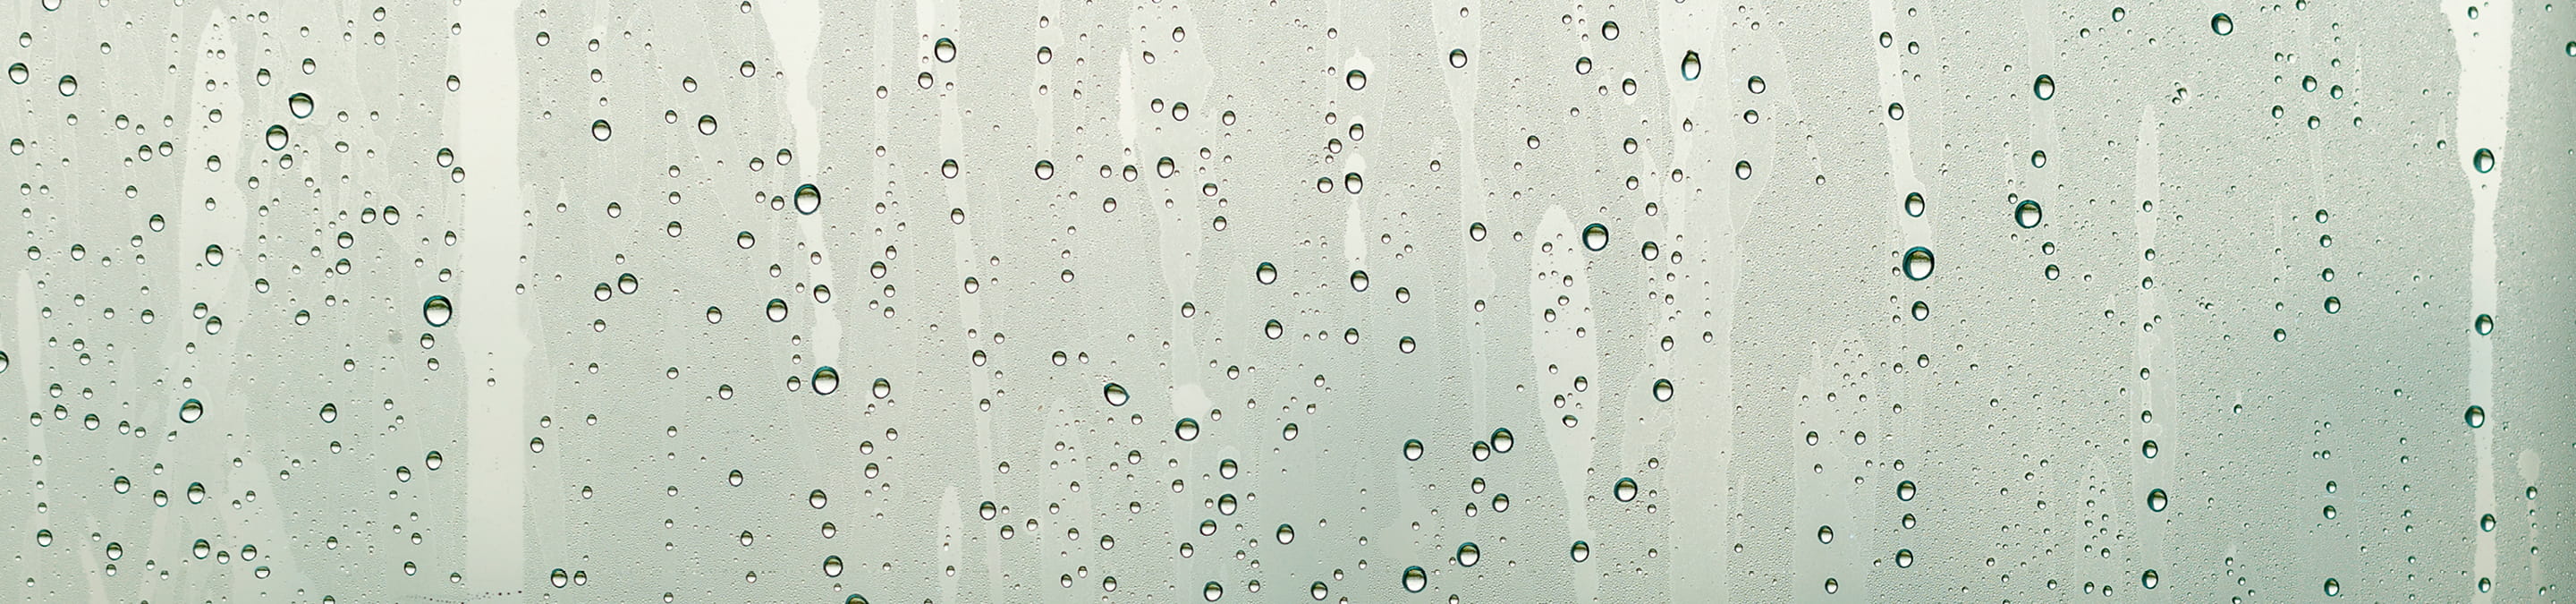 a close up of rain